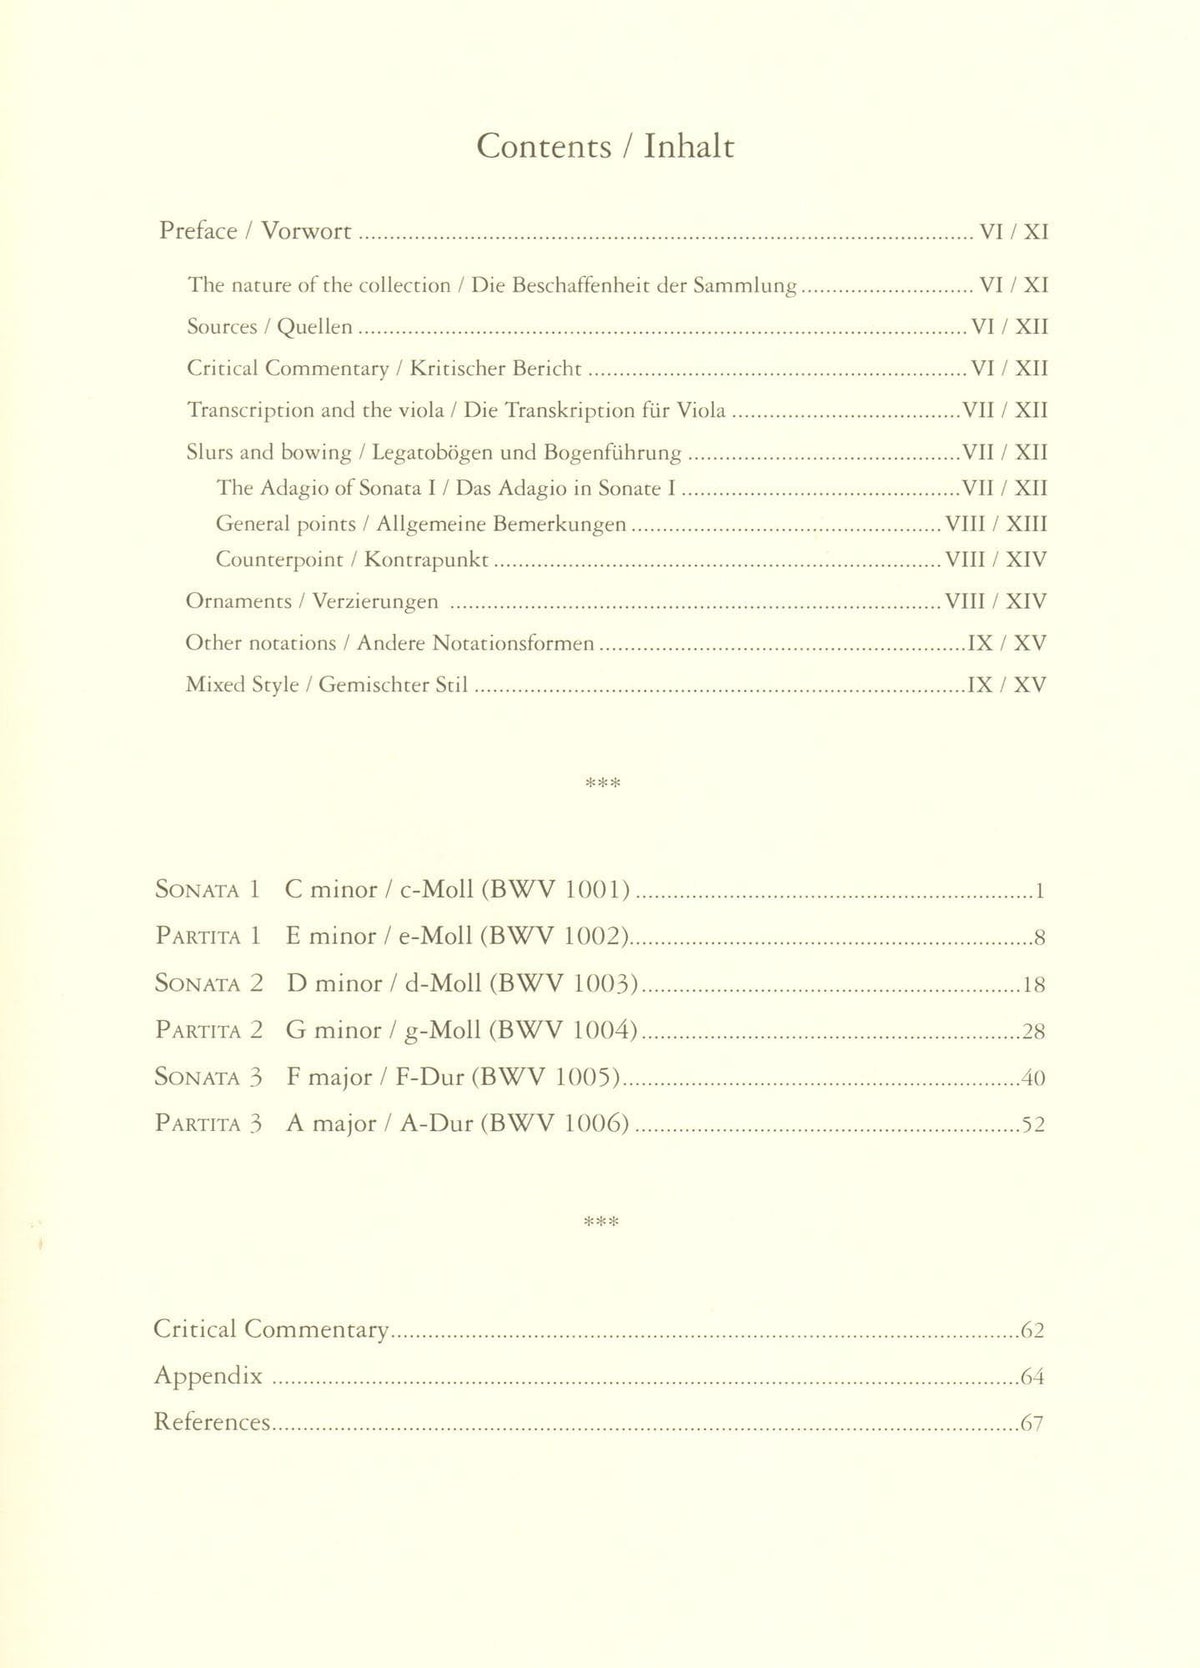 Bach, JS - 6 Sonatas and Partitas, BWV 1001-1006 - Solo Viola - edited by Simon Rowland-Jones - Edition Peters